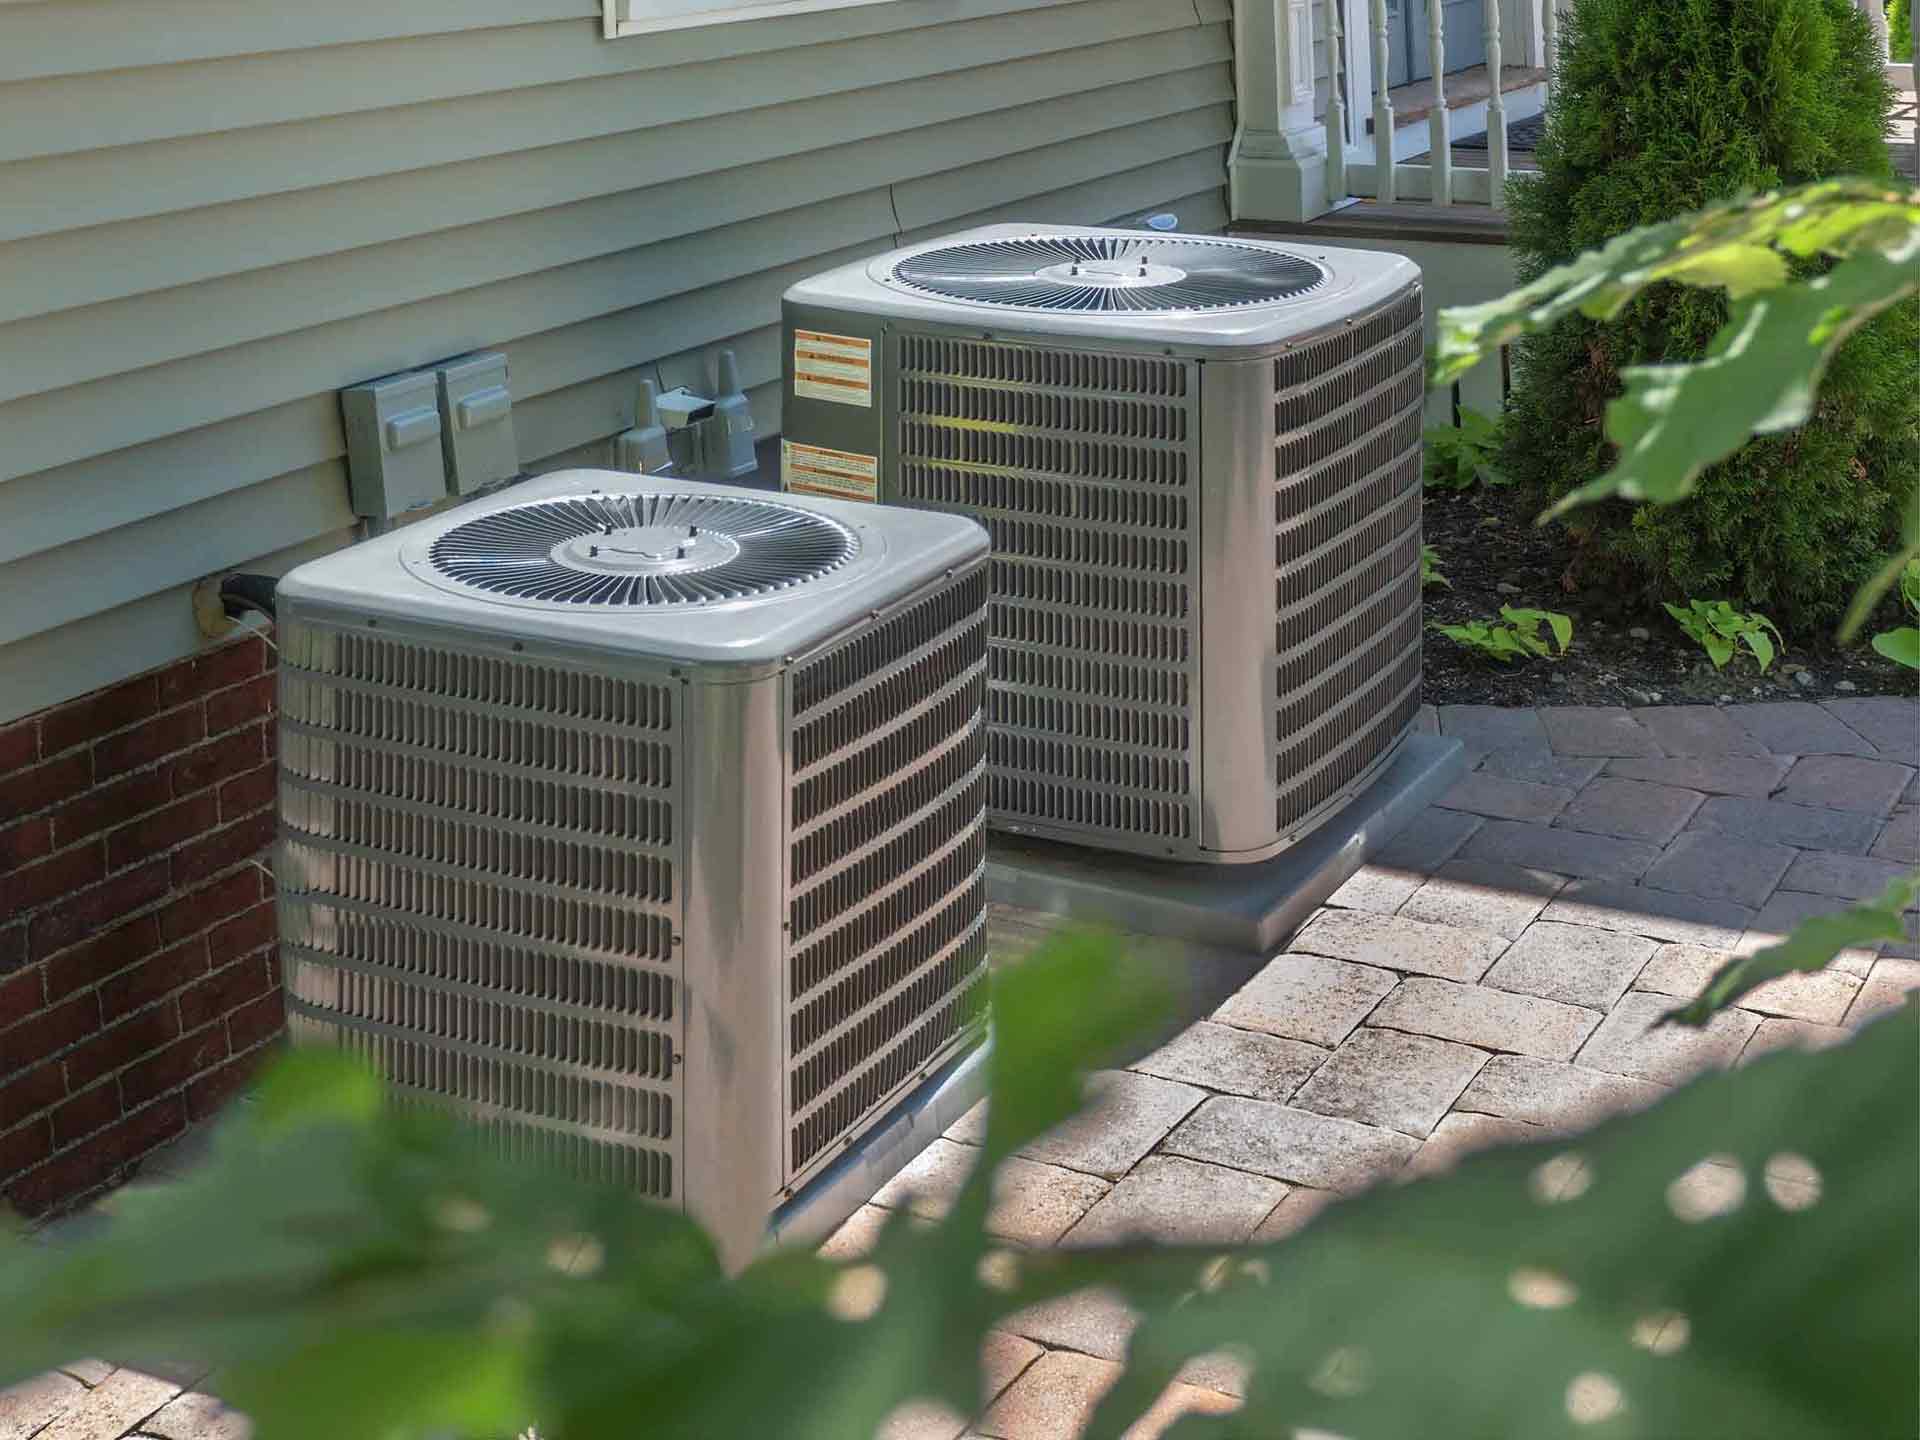 r85-air-conditioner-heat-pump-units-outside-home-16825485870766.jpg